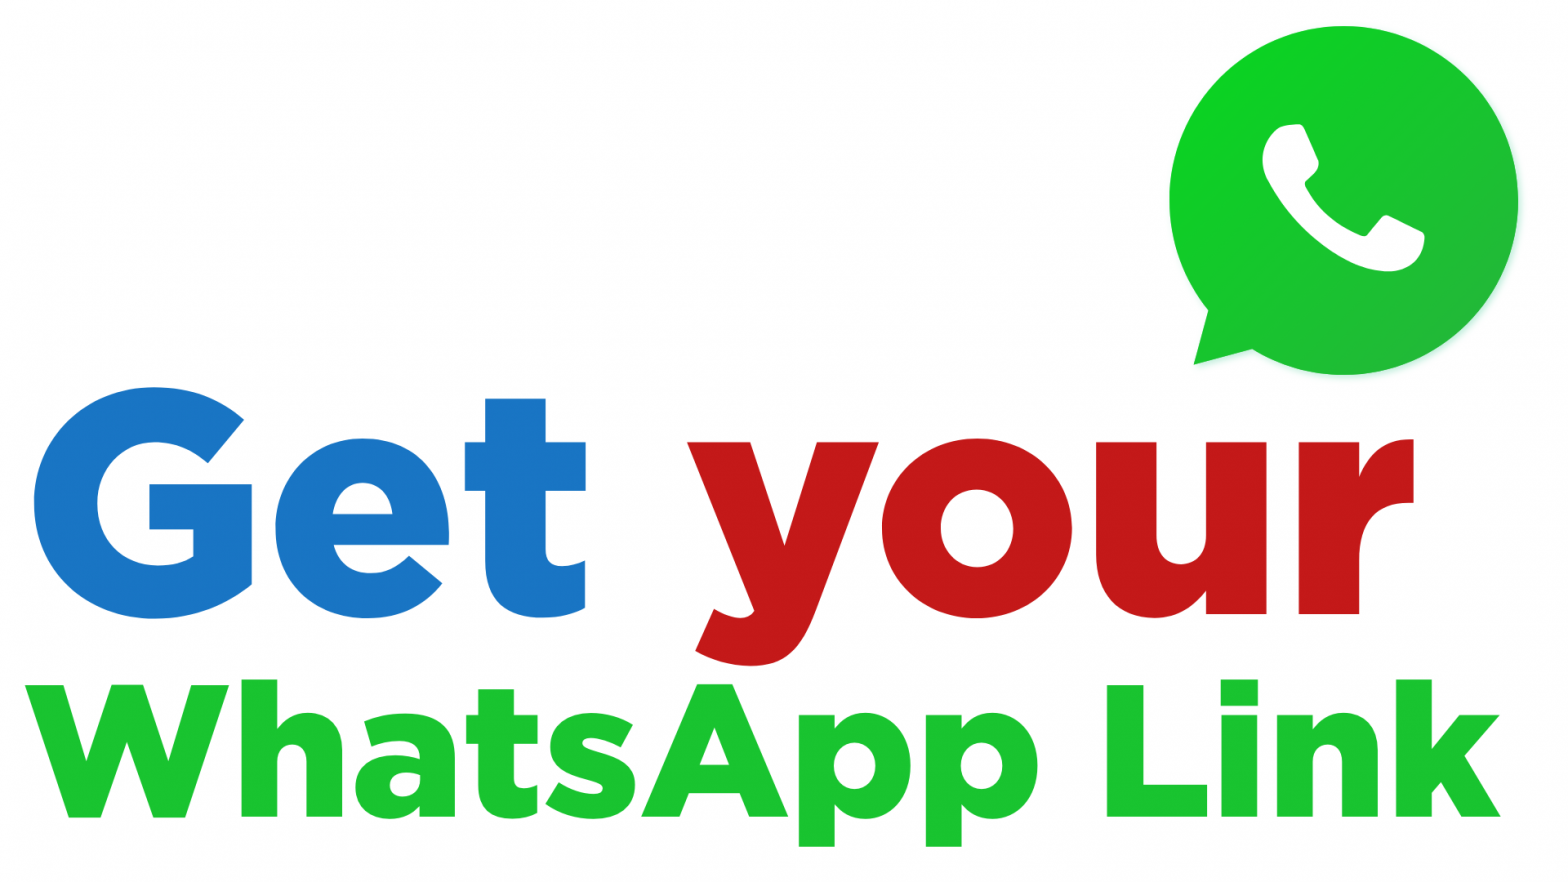 Whatsapp link chat